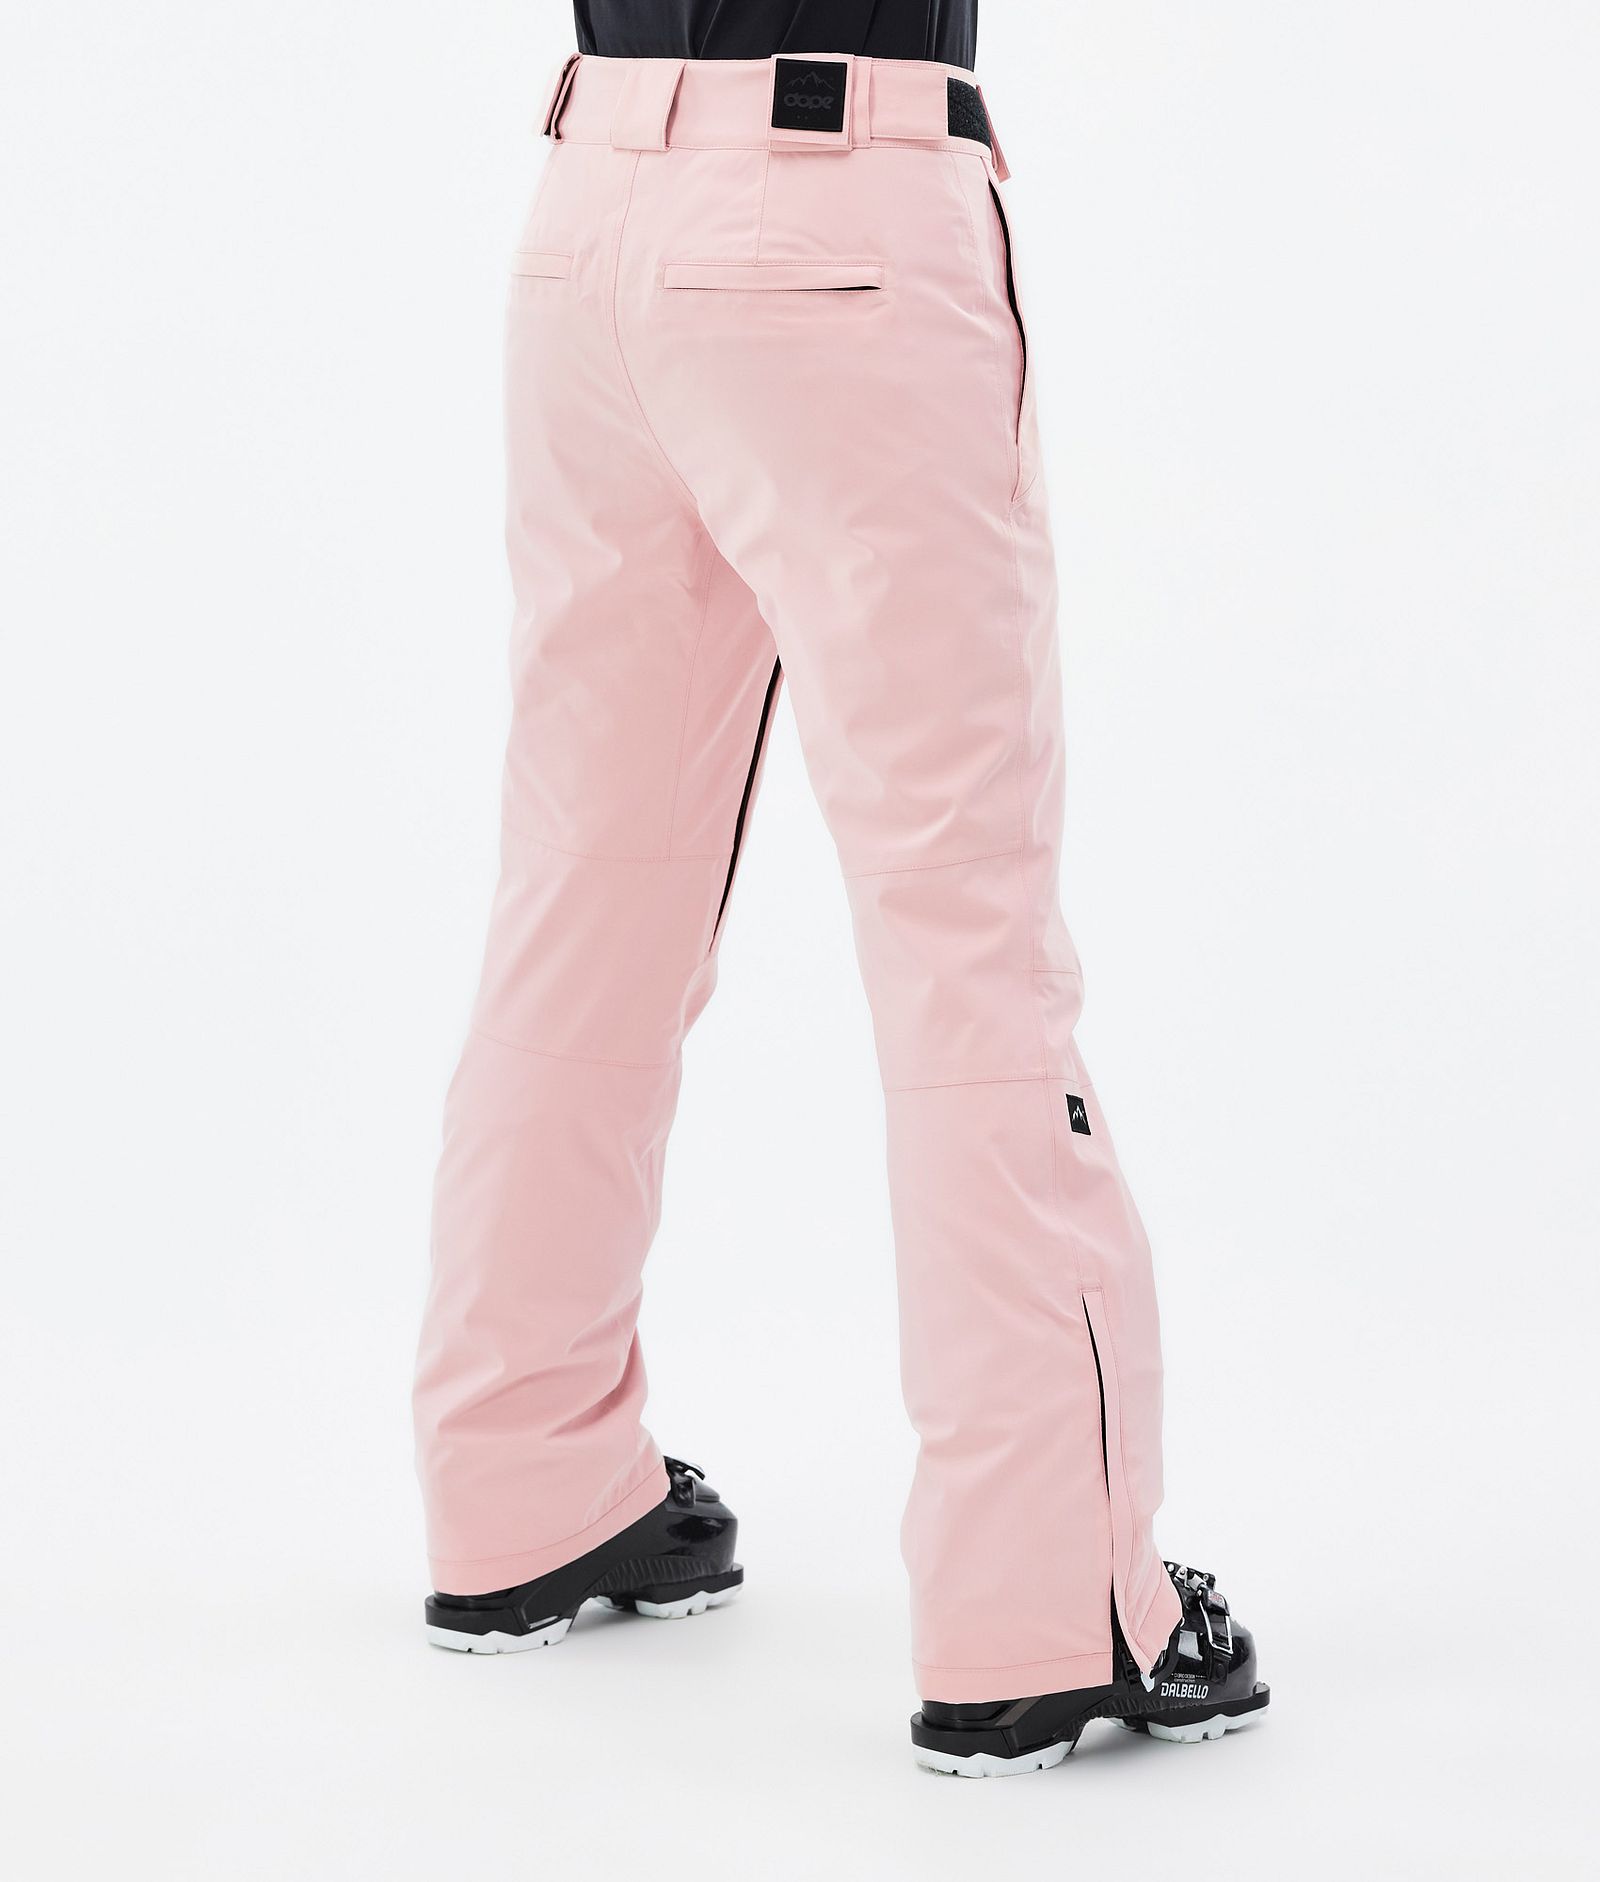 Con W 2022 Skihose Damen Soft Pink